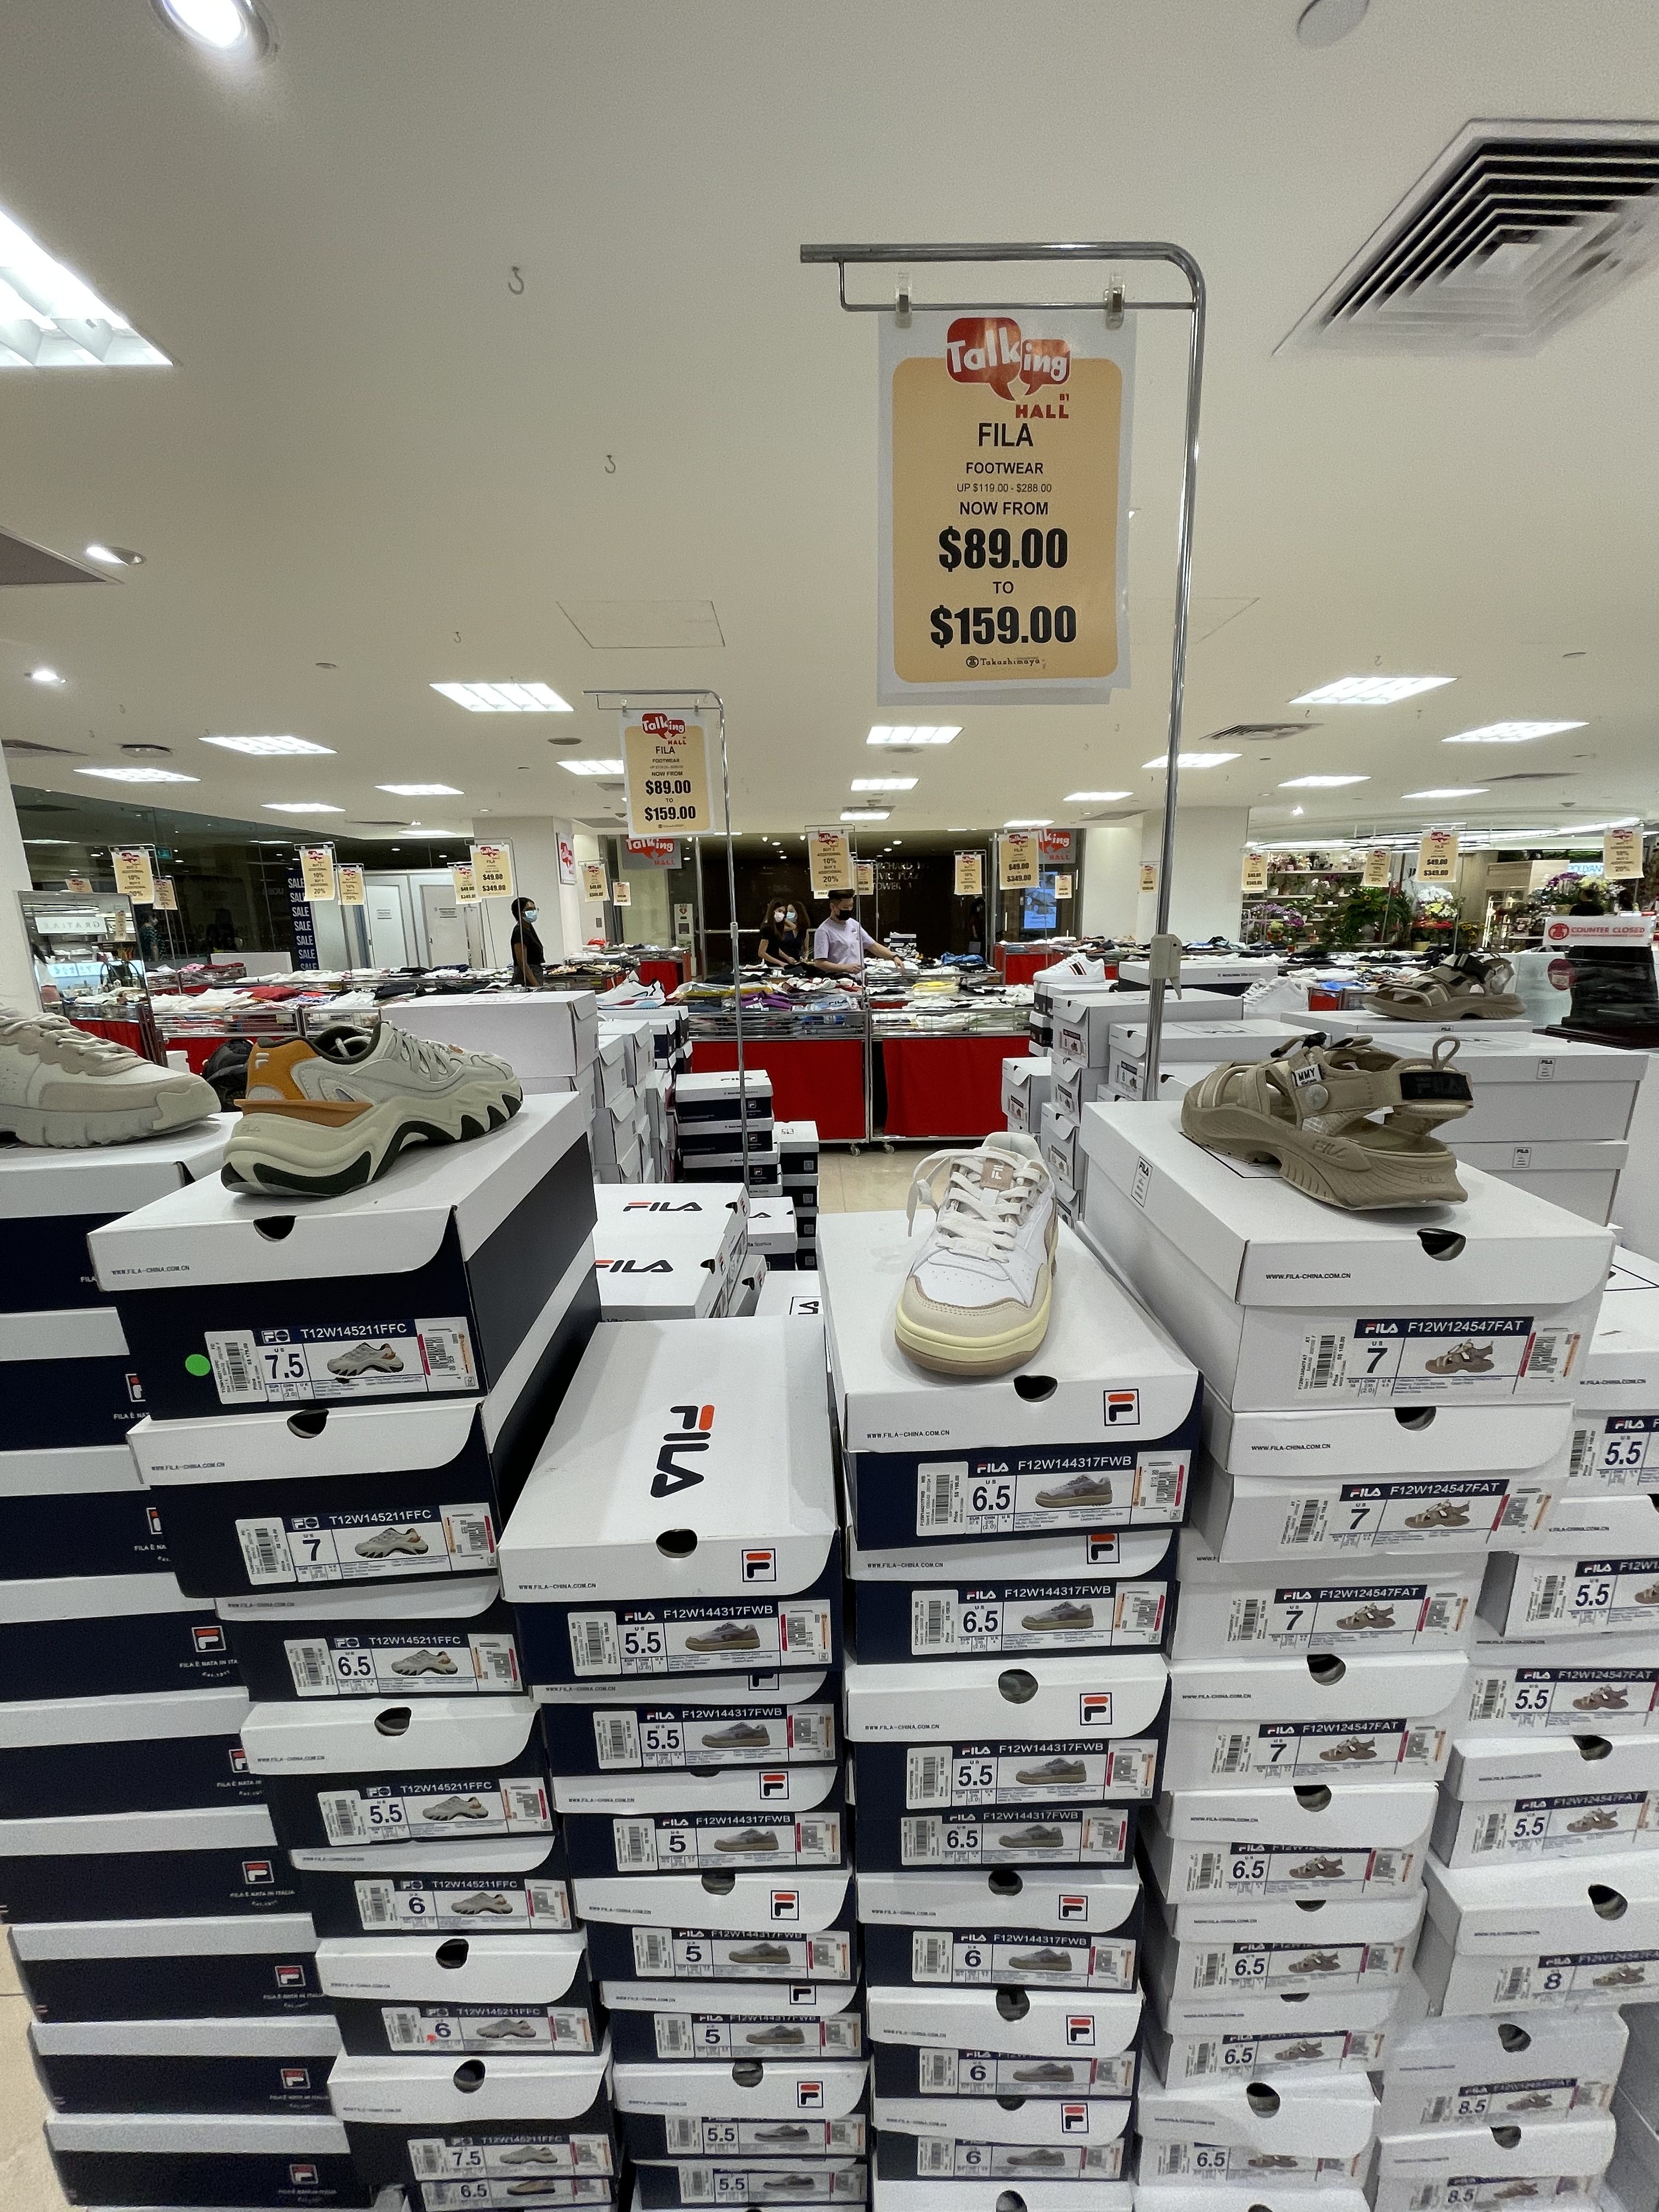 Lobang: Takashimaya has a huge FILA Fair offering up to 50% off footwear and apparels till 31 August 2022. - 5